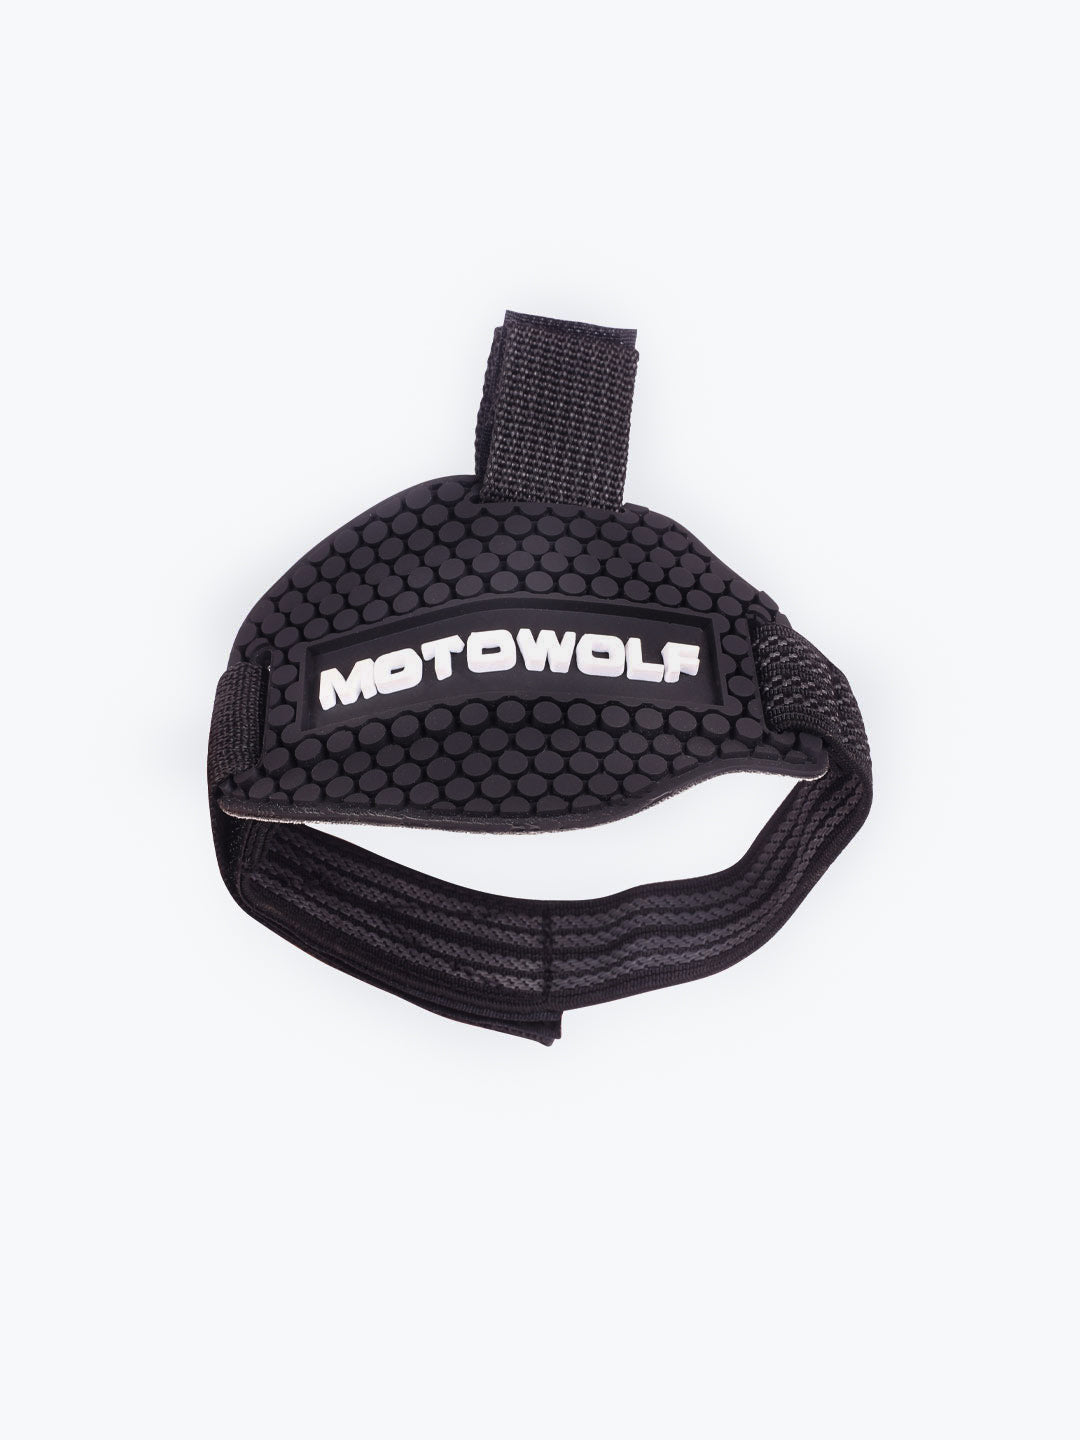 Motowolf Shoe Protector 901 Black